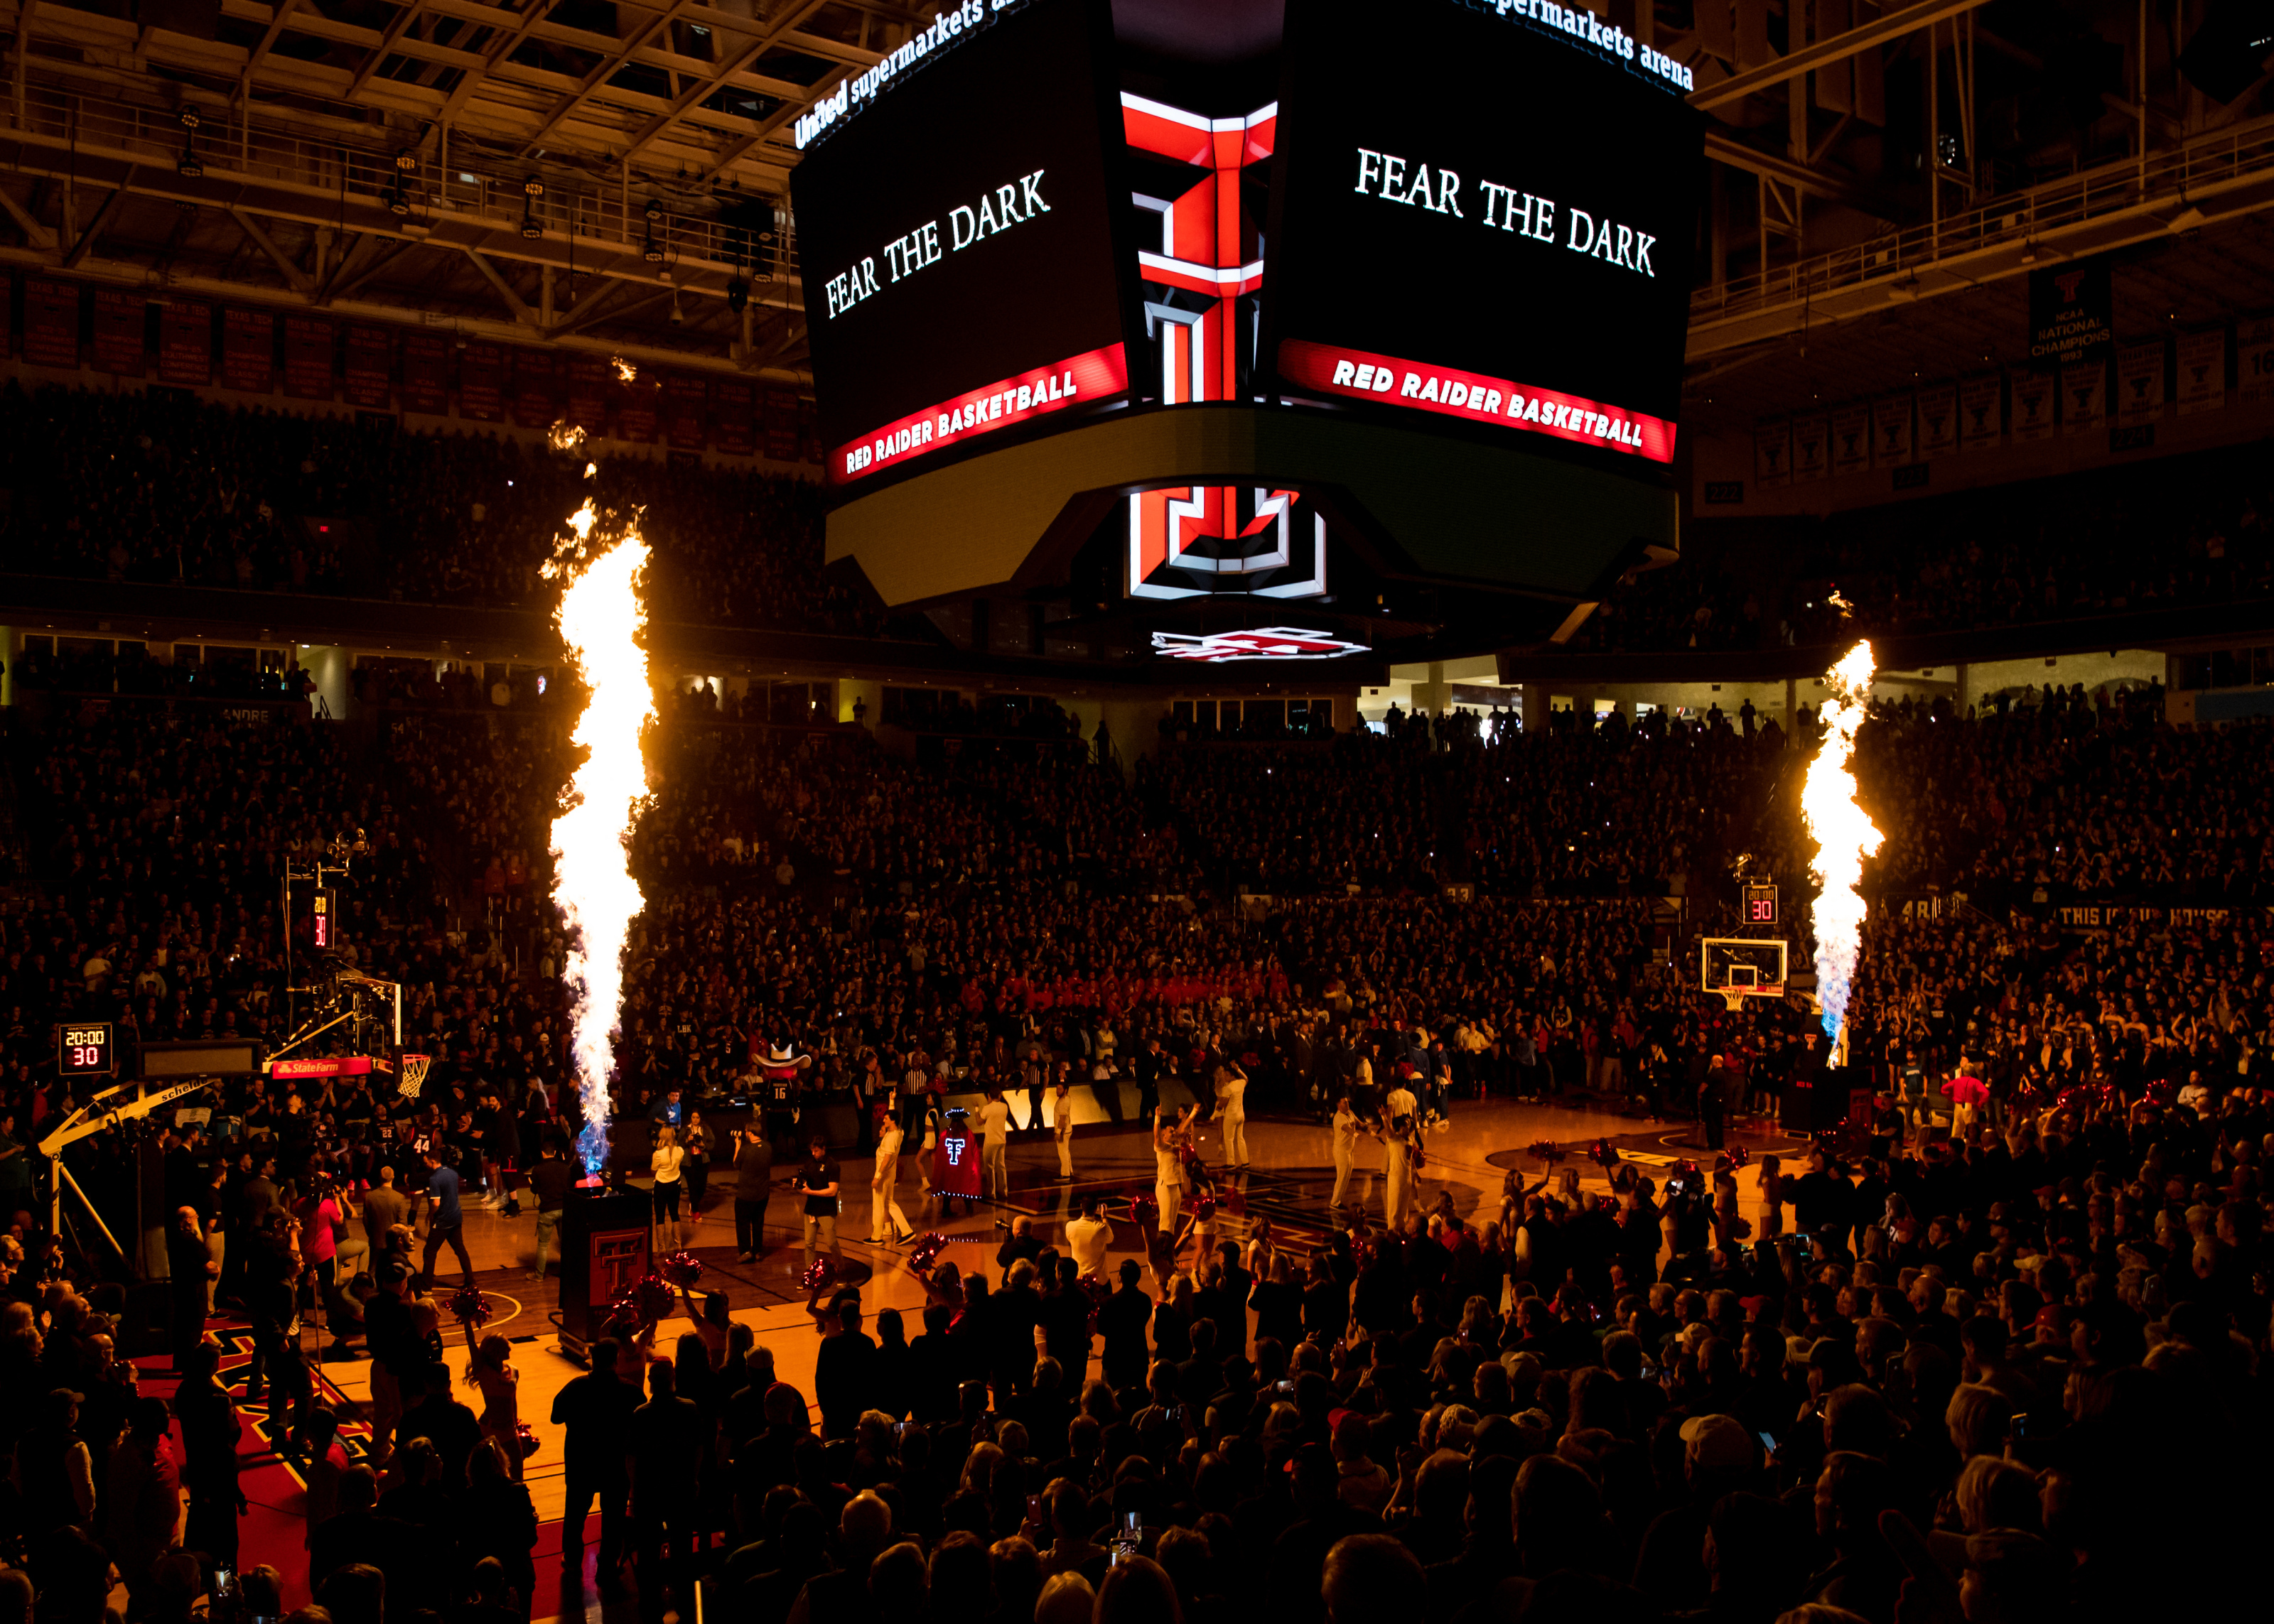 Texas Tech Basketball on X: We win, we sing 👆